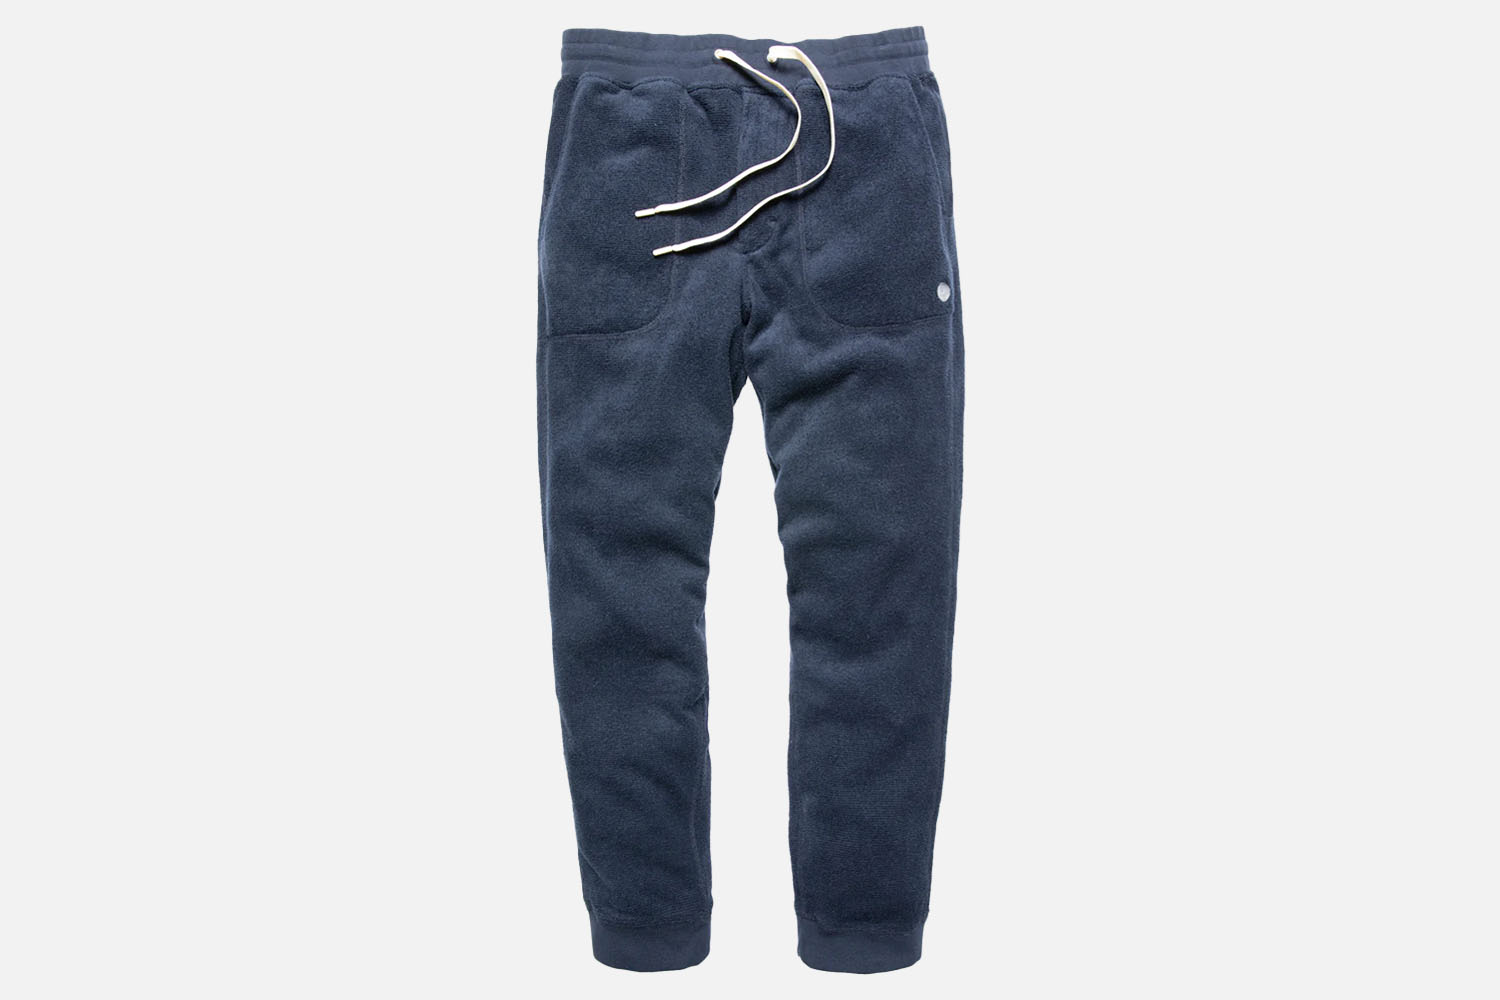 Buy Blue Jeans Hysterical Funny Men's Faux Denim Pajama Sleep Sleeping Lounge  Pants (Medium (32-34)) at Amazon.in